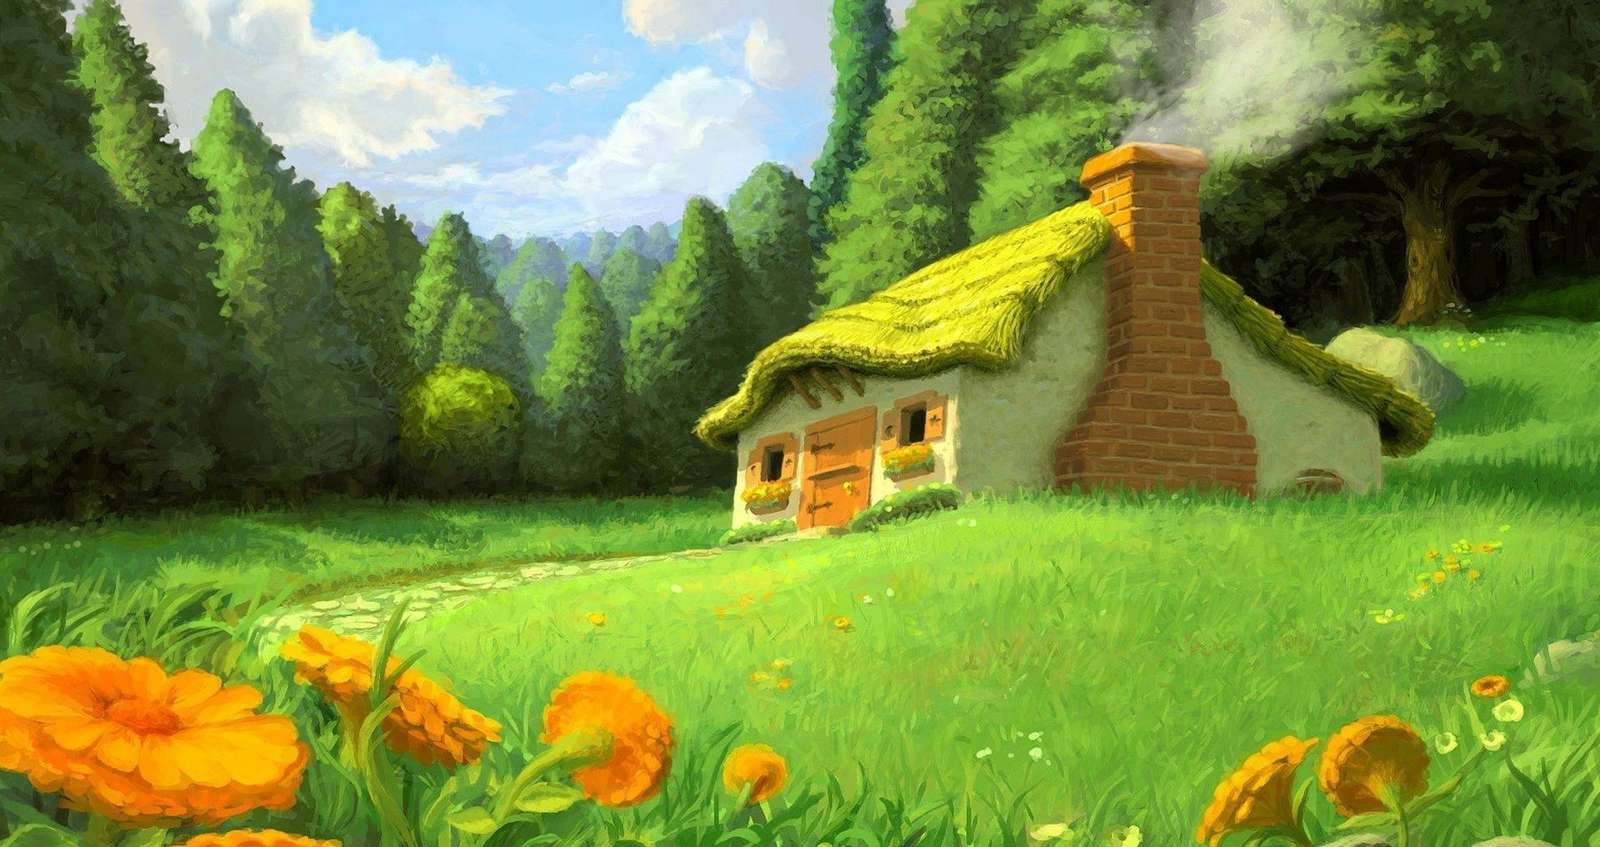 Casa in montagna puzzle online